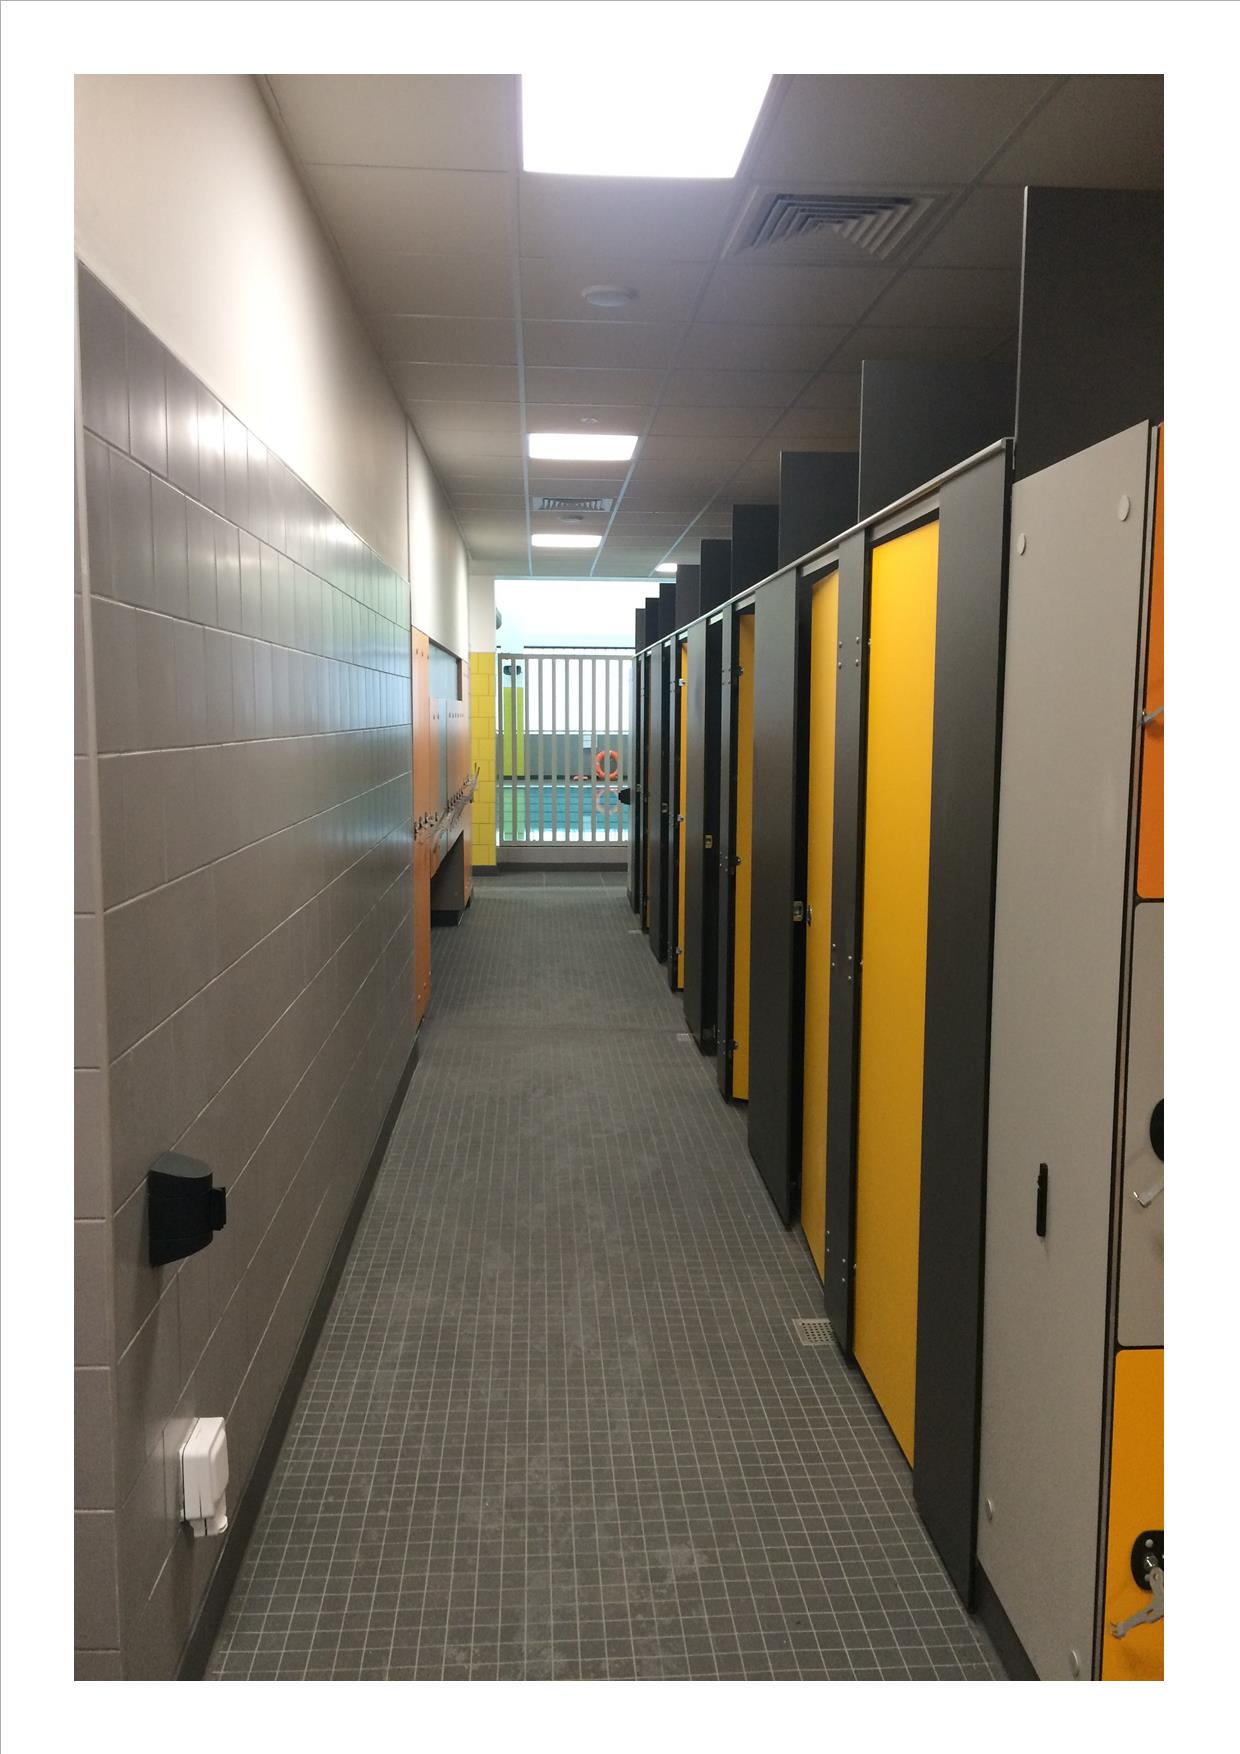 image of corridor leading to swimming pool